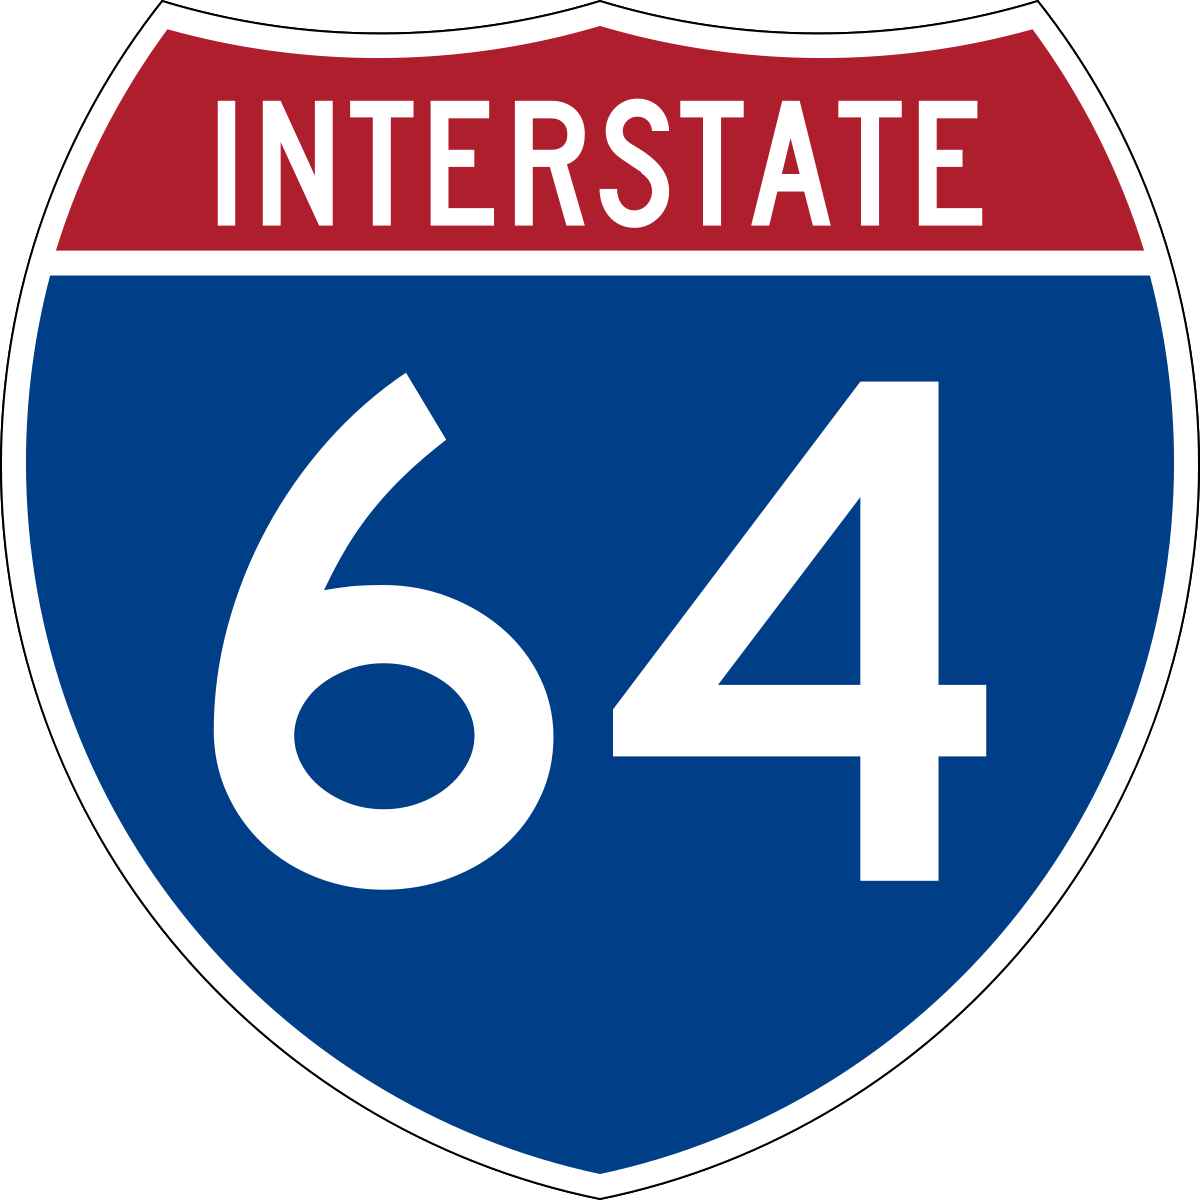 Interstate 64 - Wikipedia